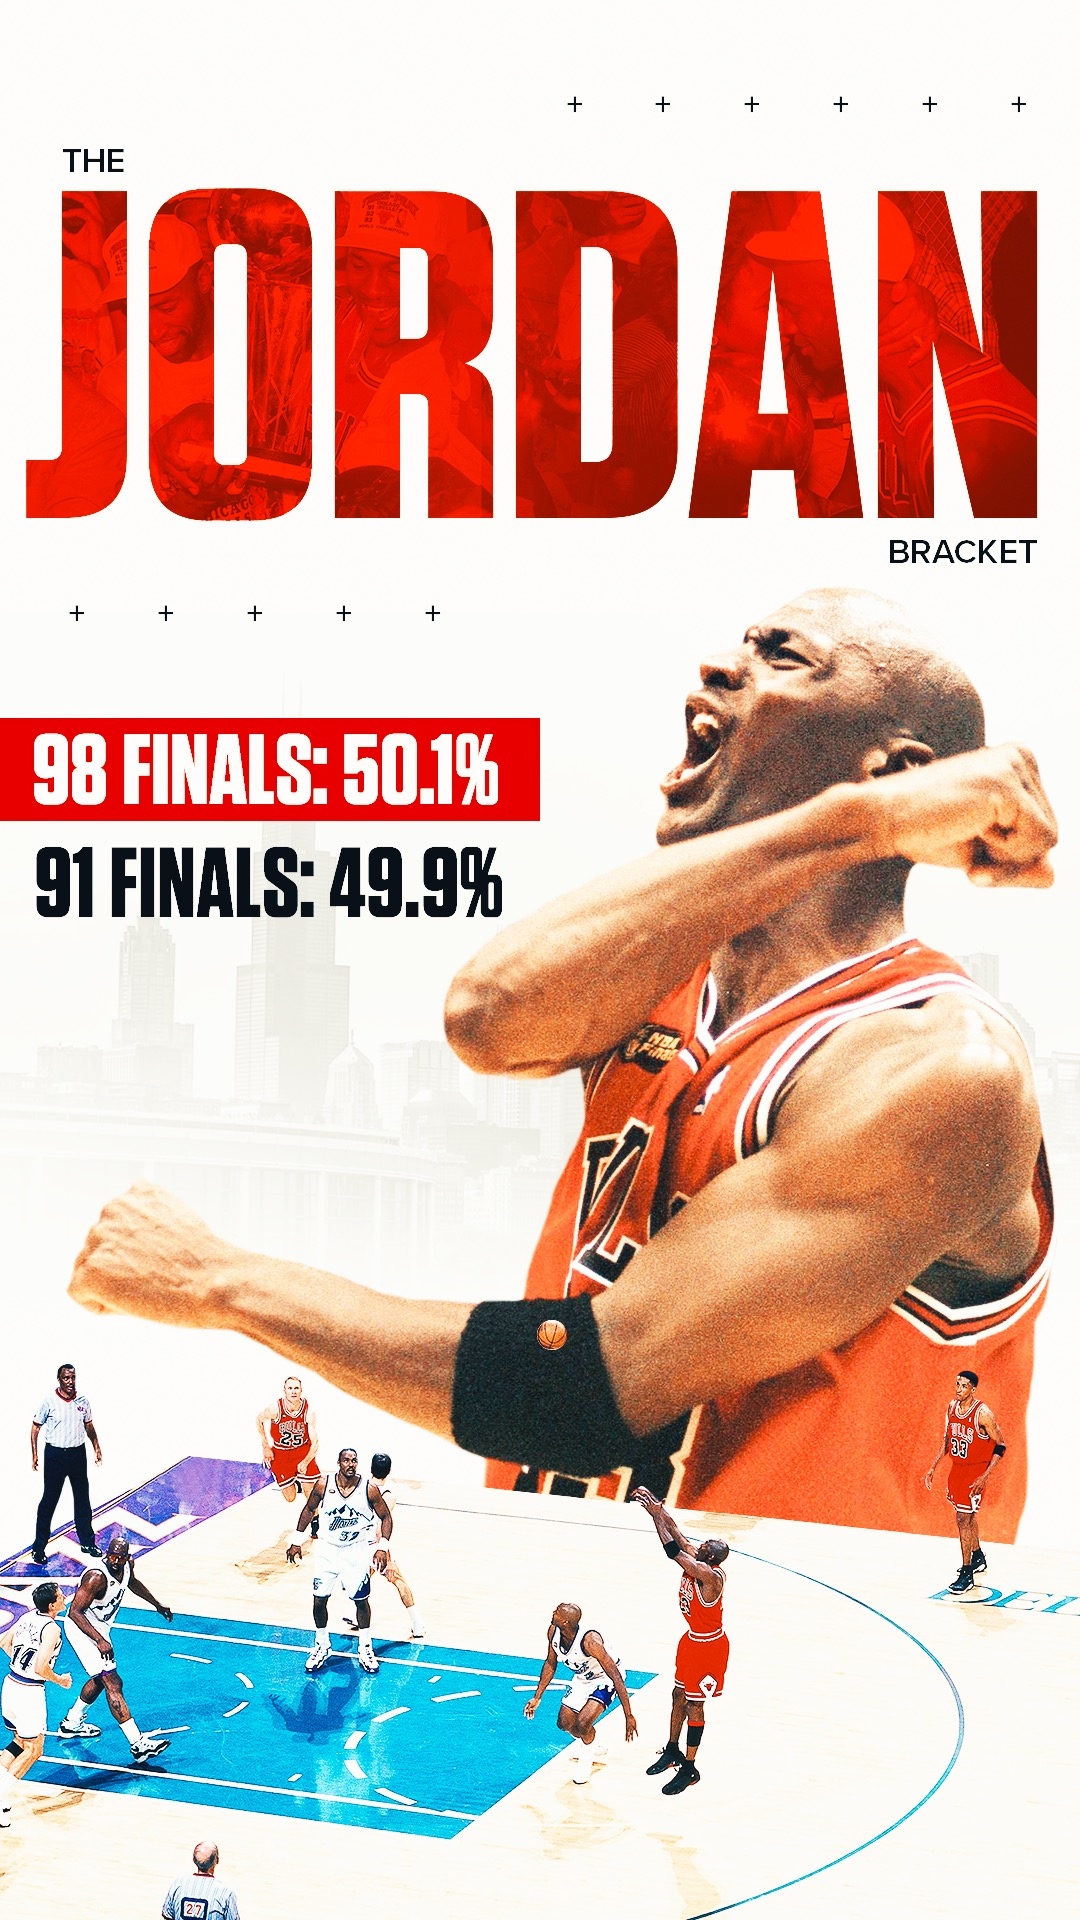 Jordan Bracket winner: 1998 NBA Finals 